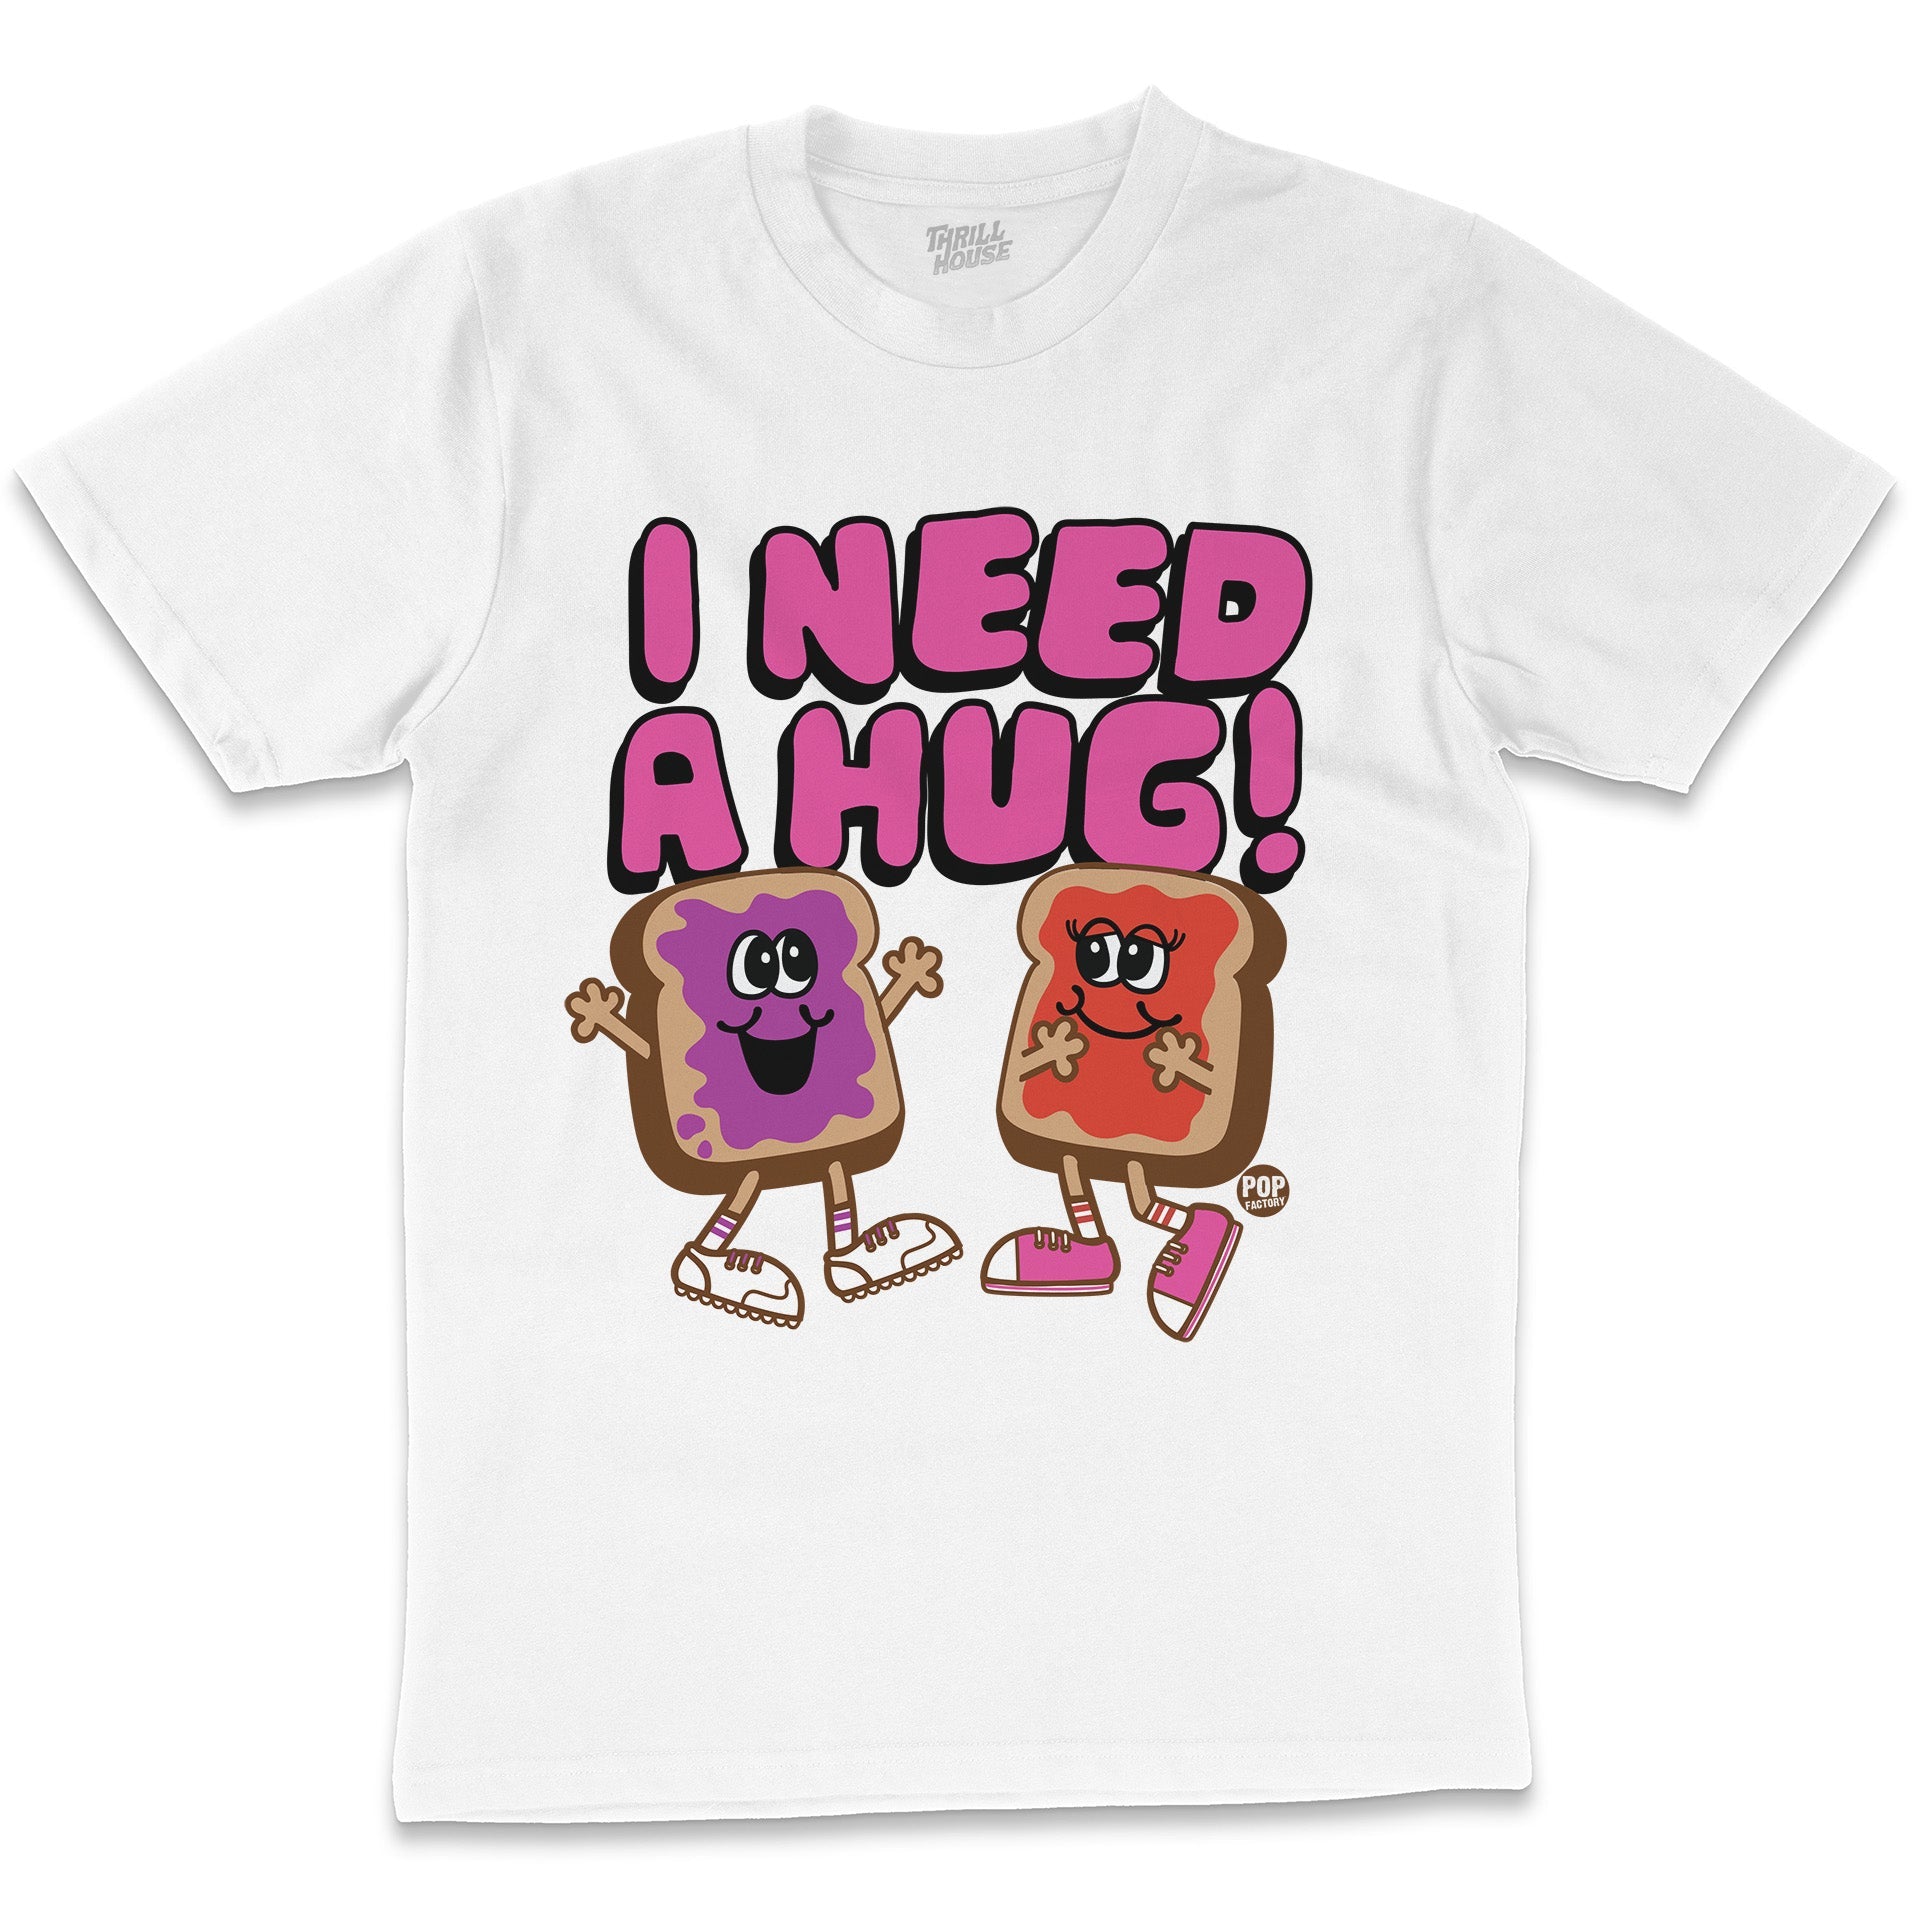 Need a Hug PBJ Peanut Butter Jam Sandwich Funny Slogan Cotton T-Shirt